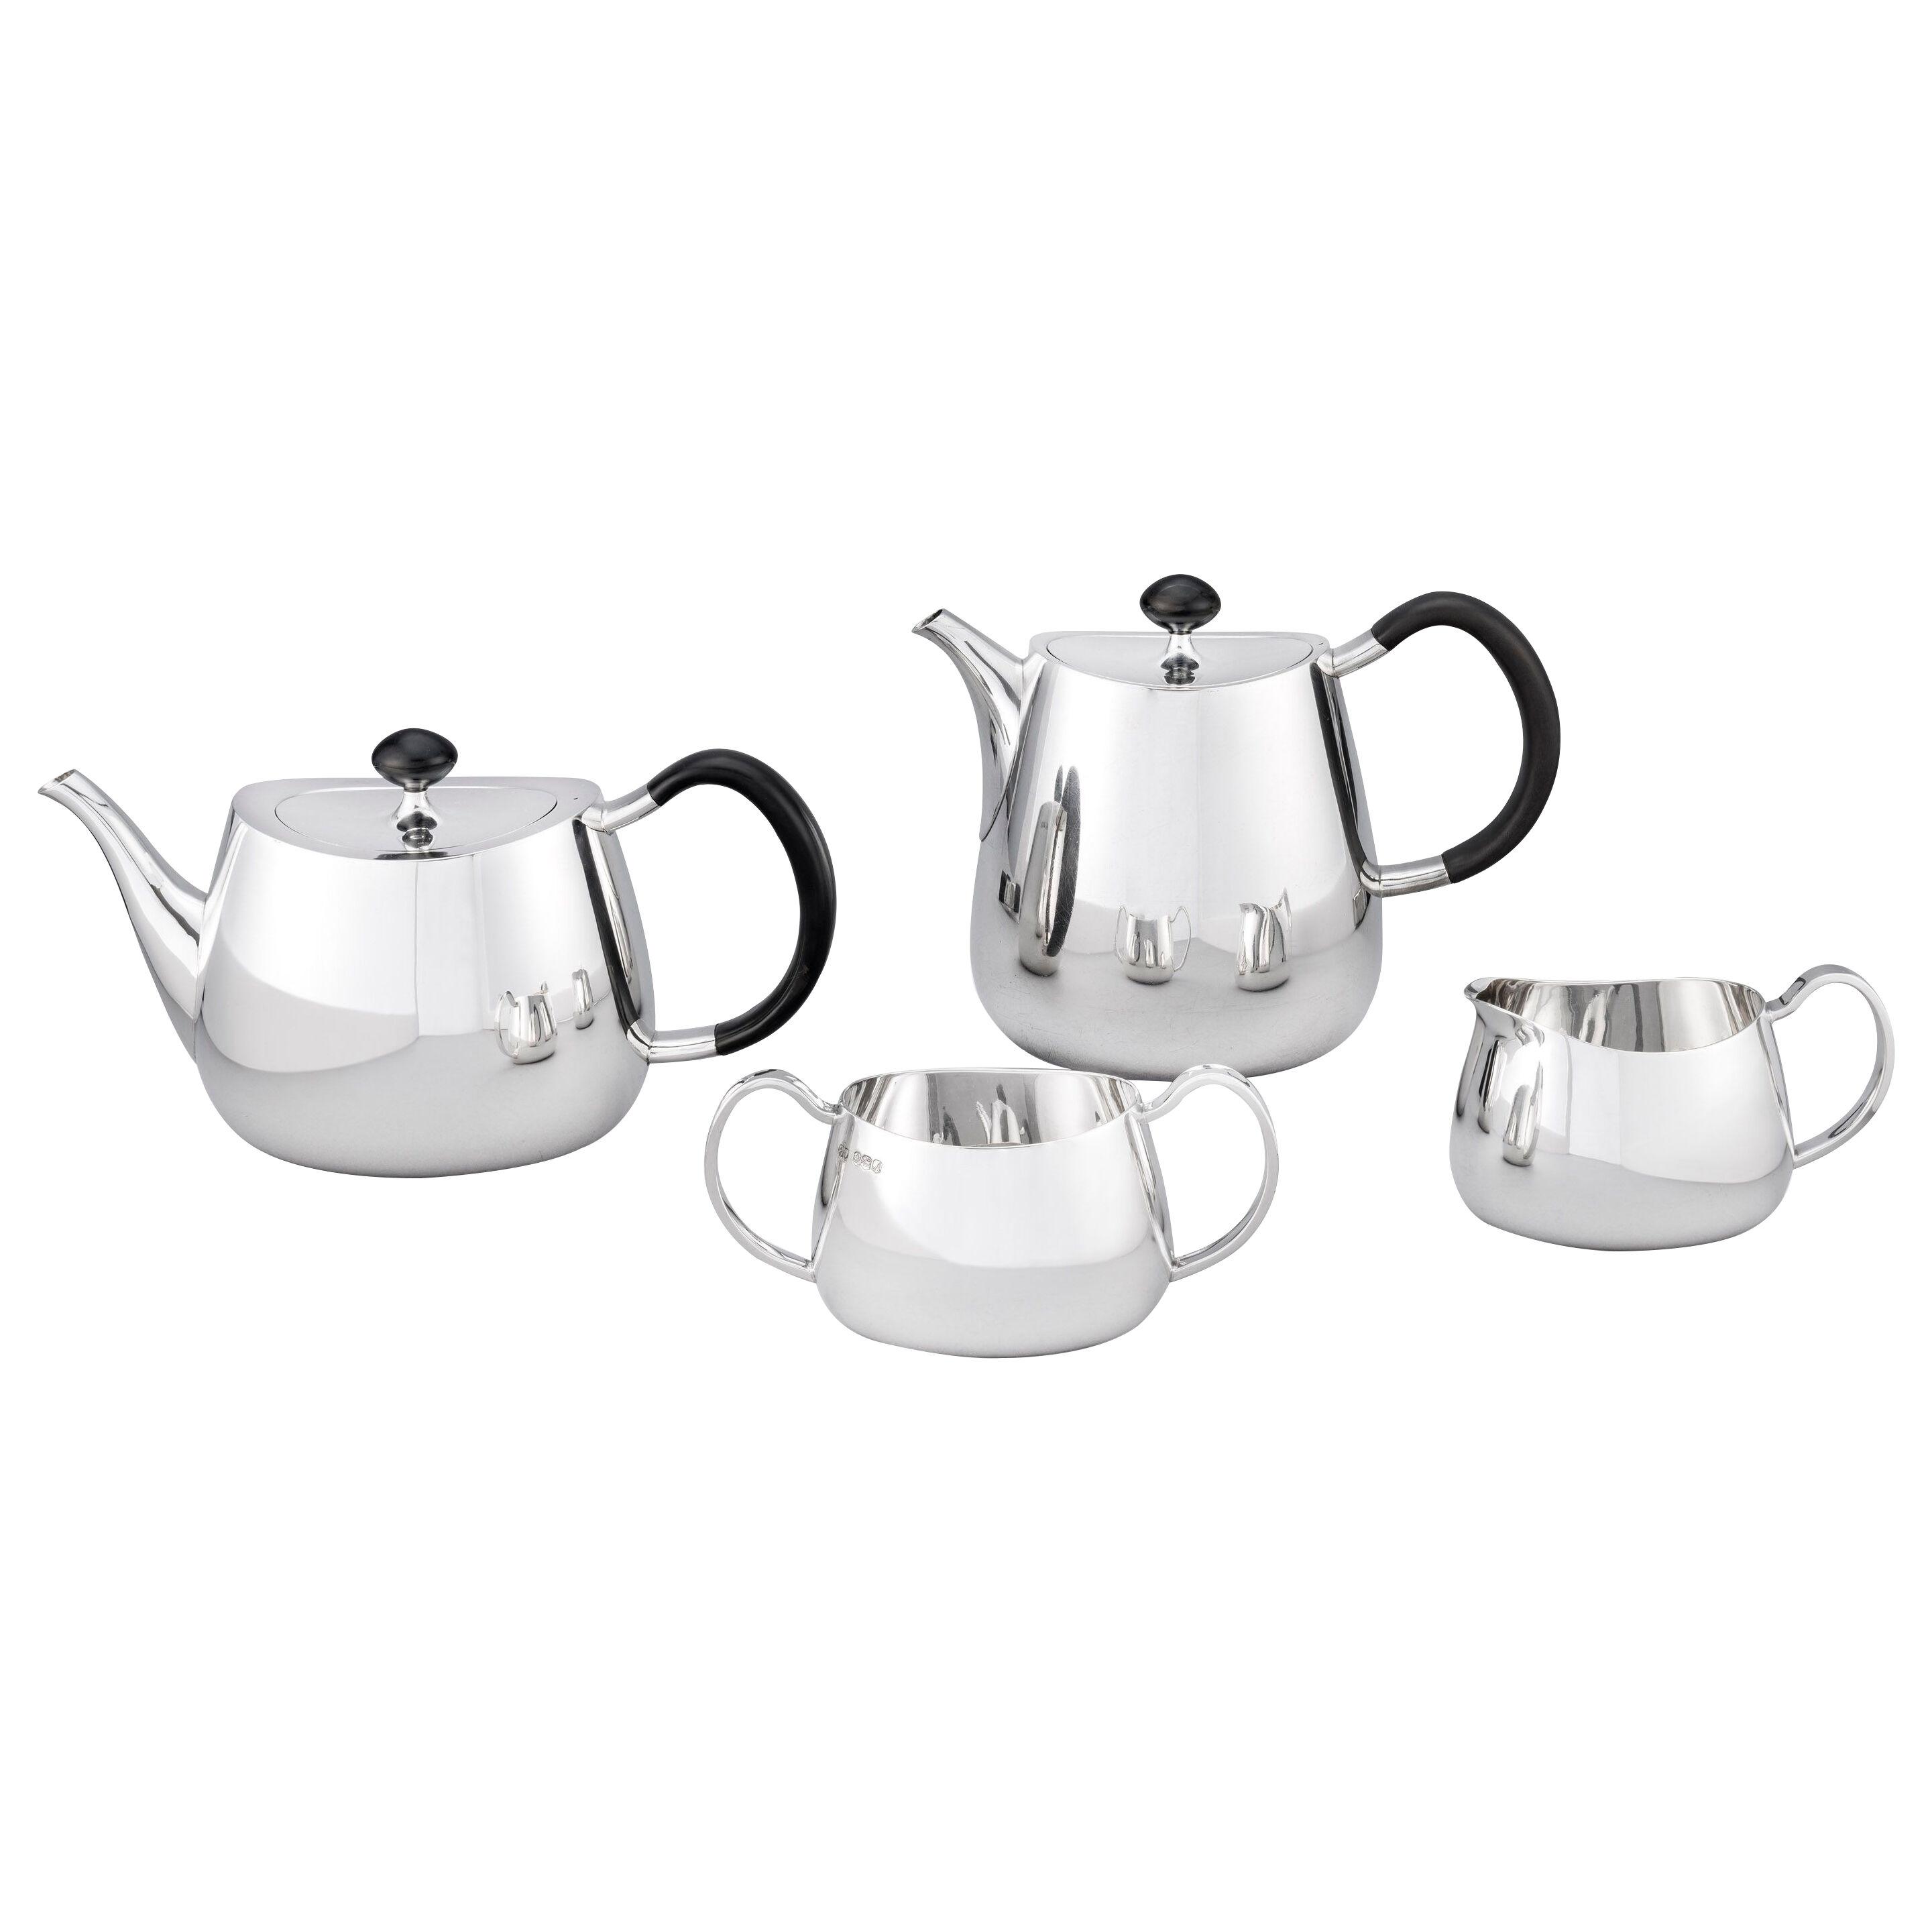  A silver "Pride pattern" Tea & Coffee Service